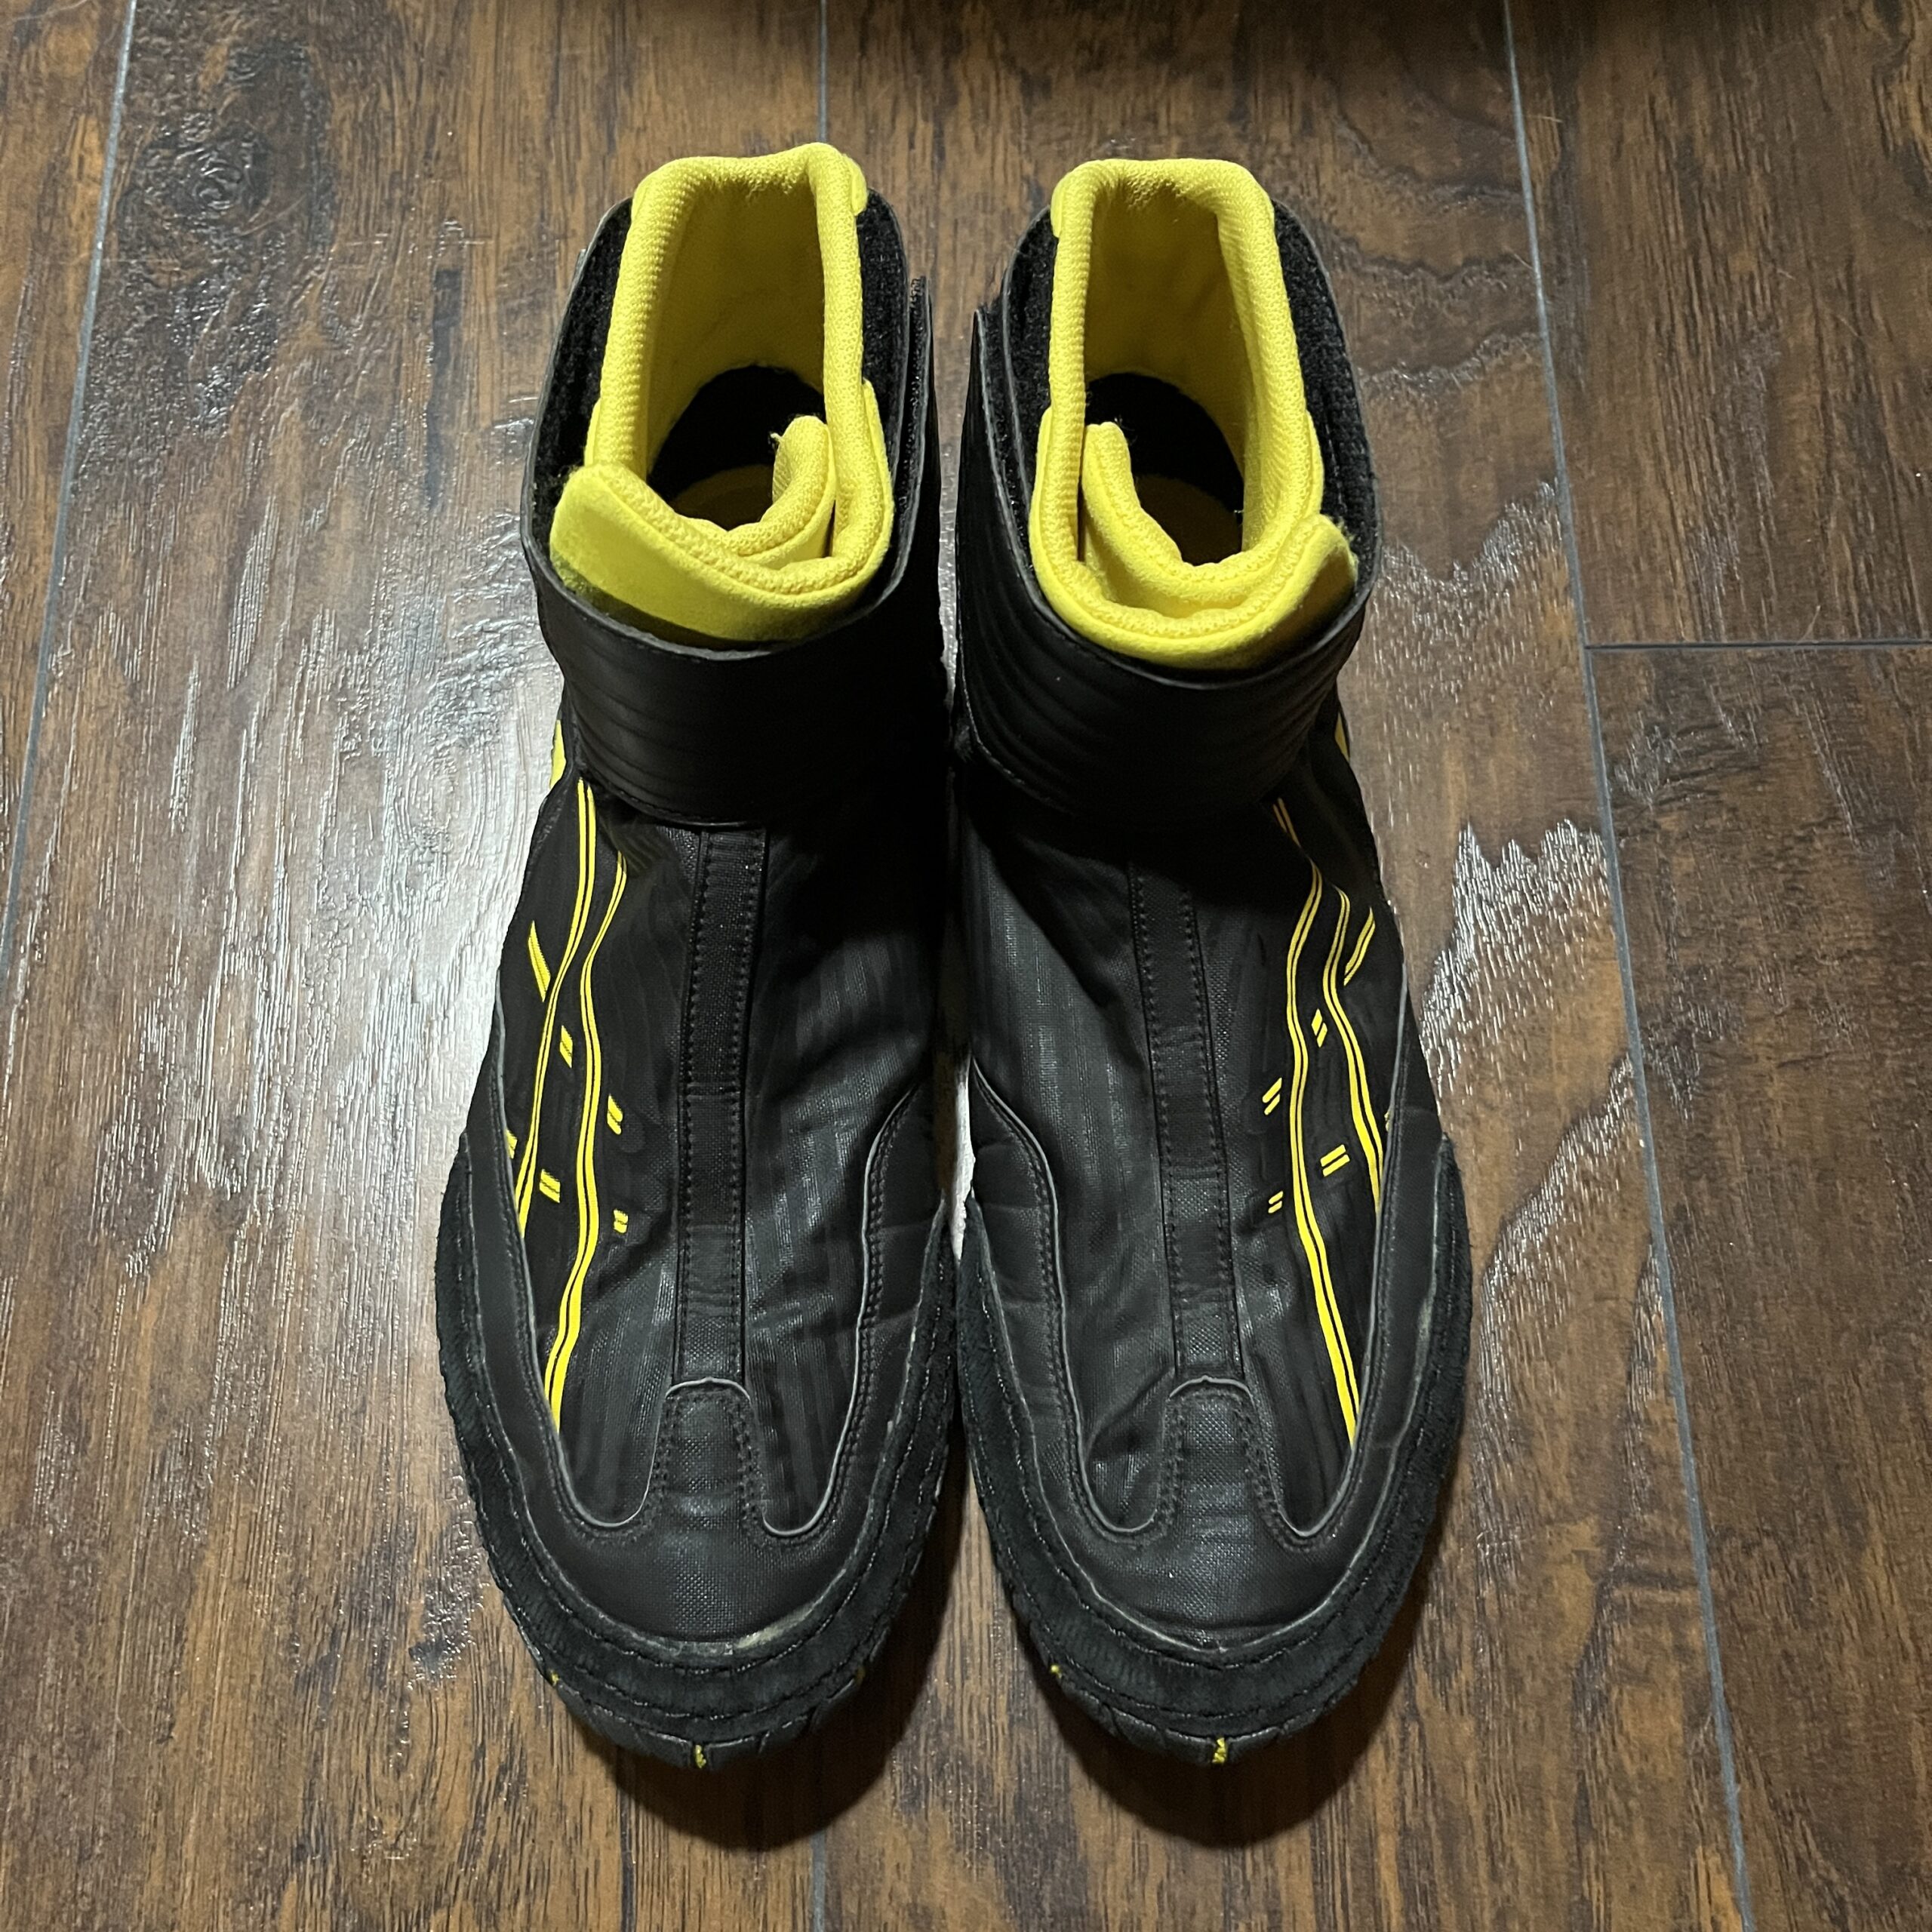 Asics Black & Yellow 54 Wrestling Shoes